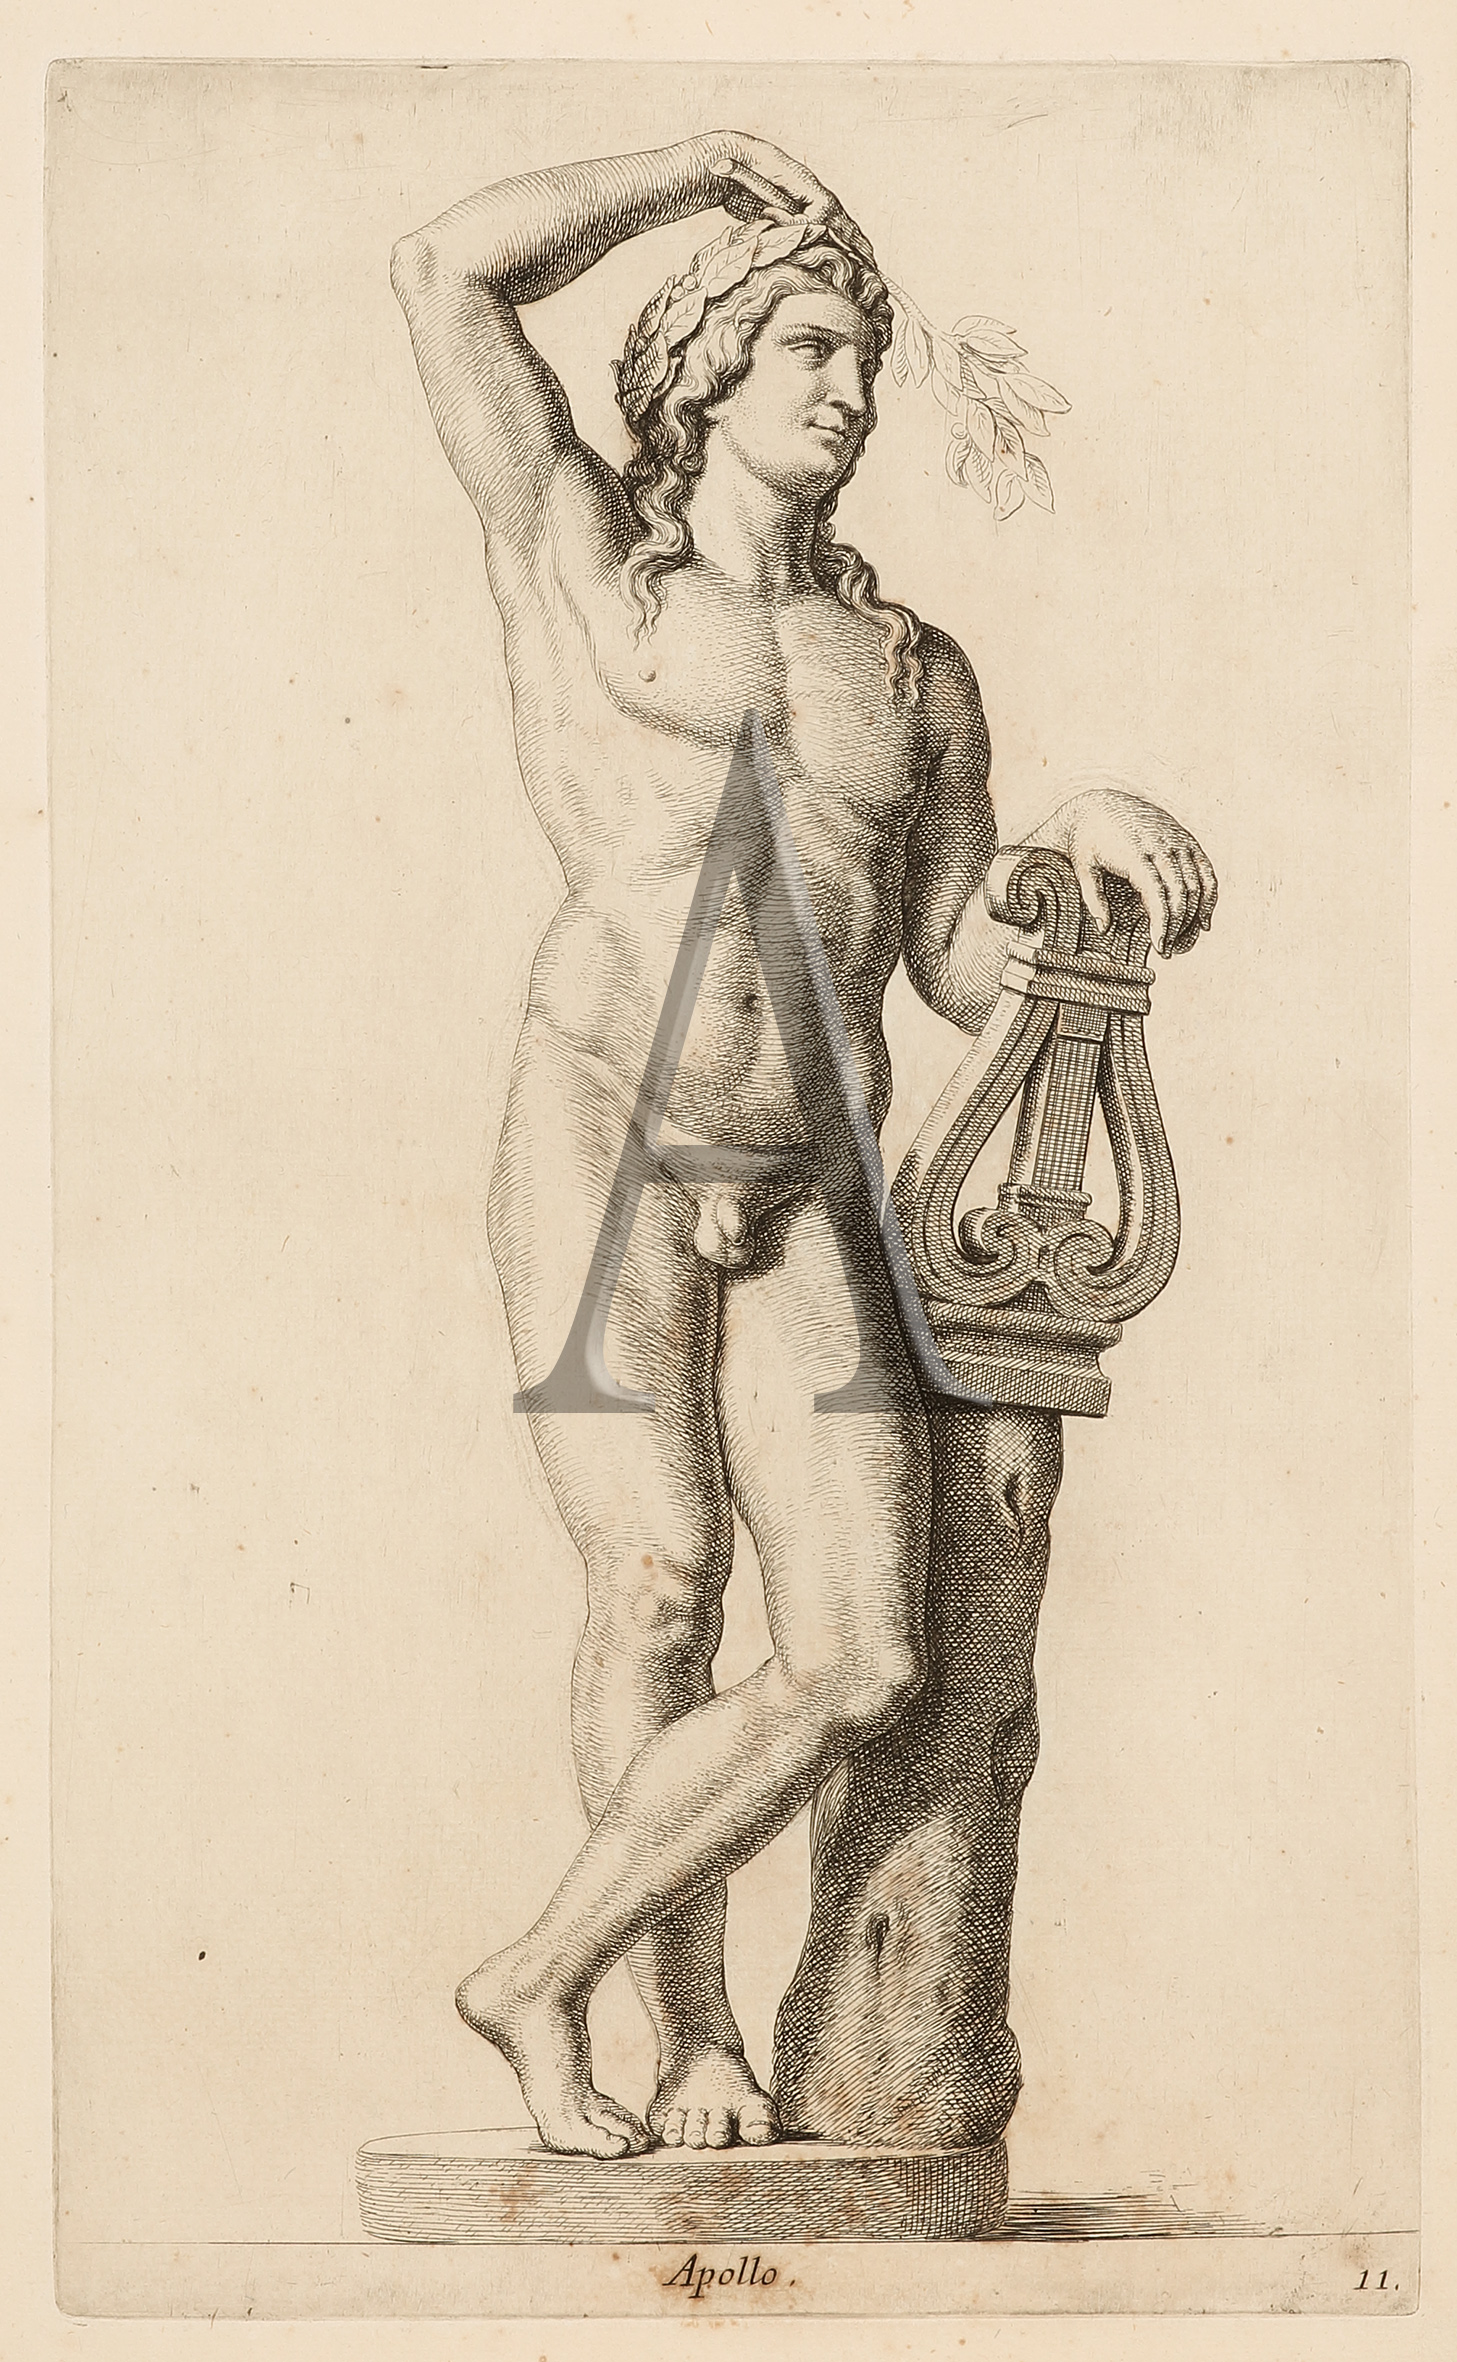 Apollo - Antique Print from 1671